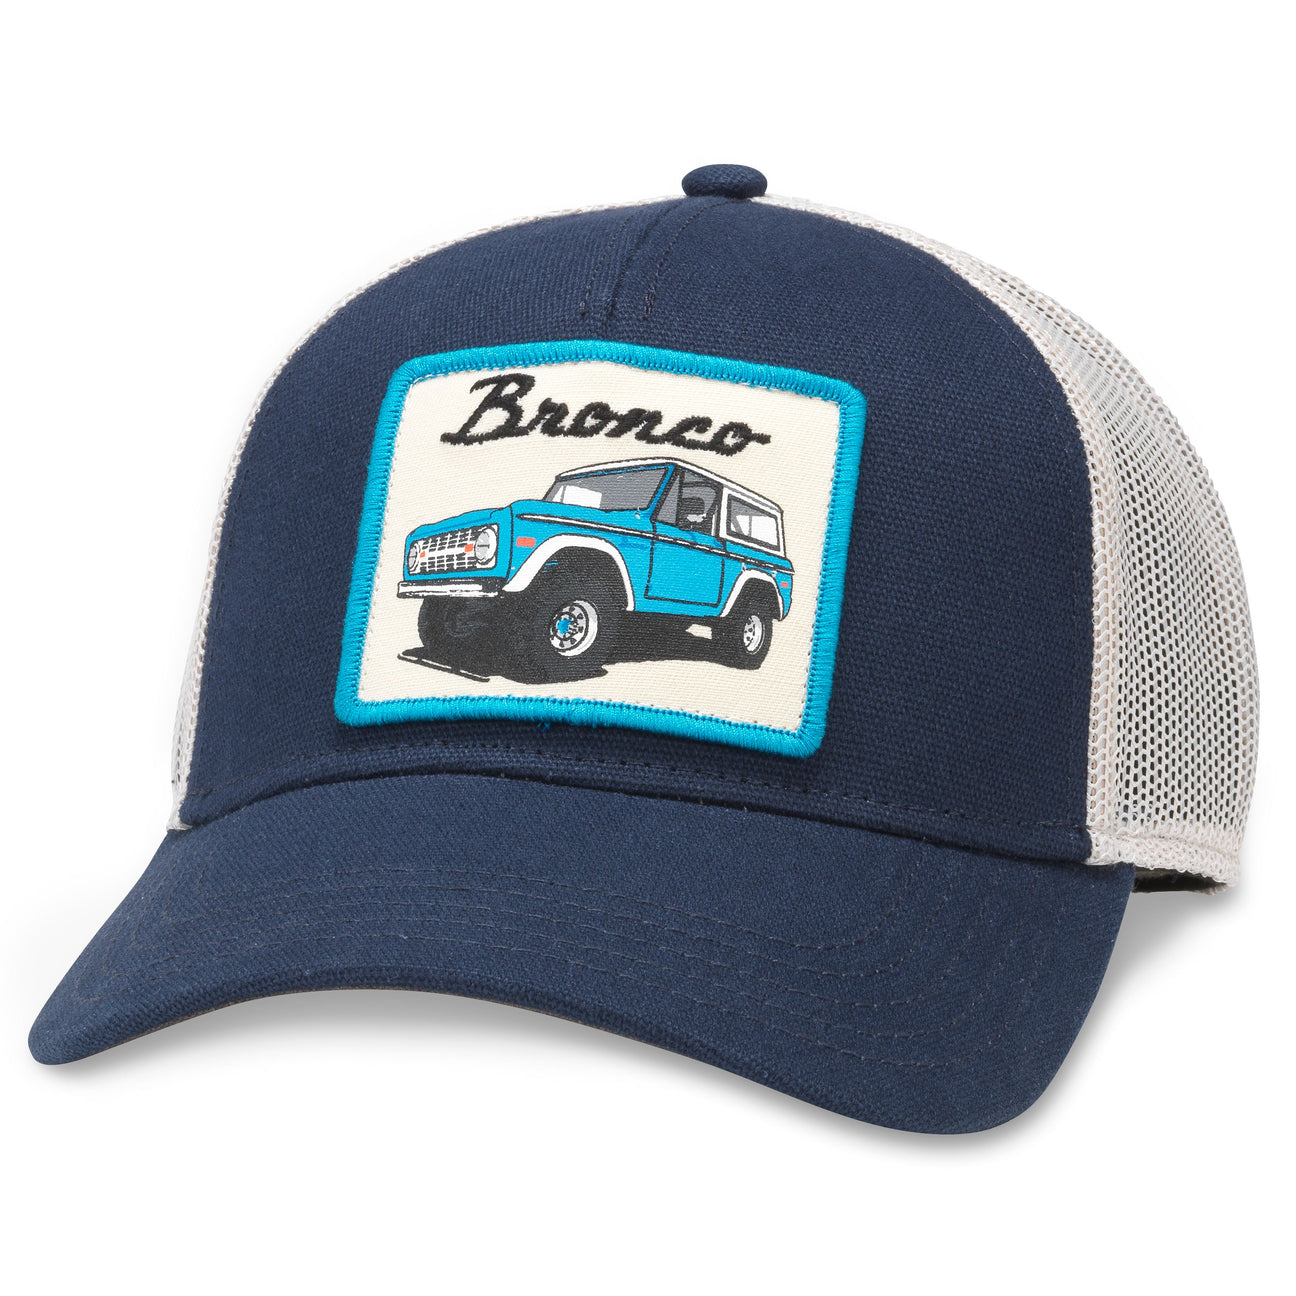 FORD Bronco VALIN hat